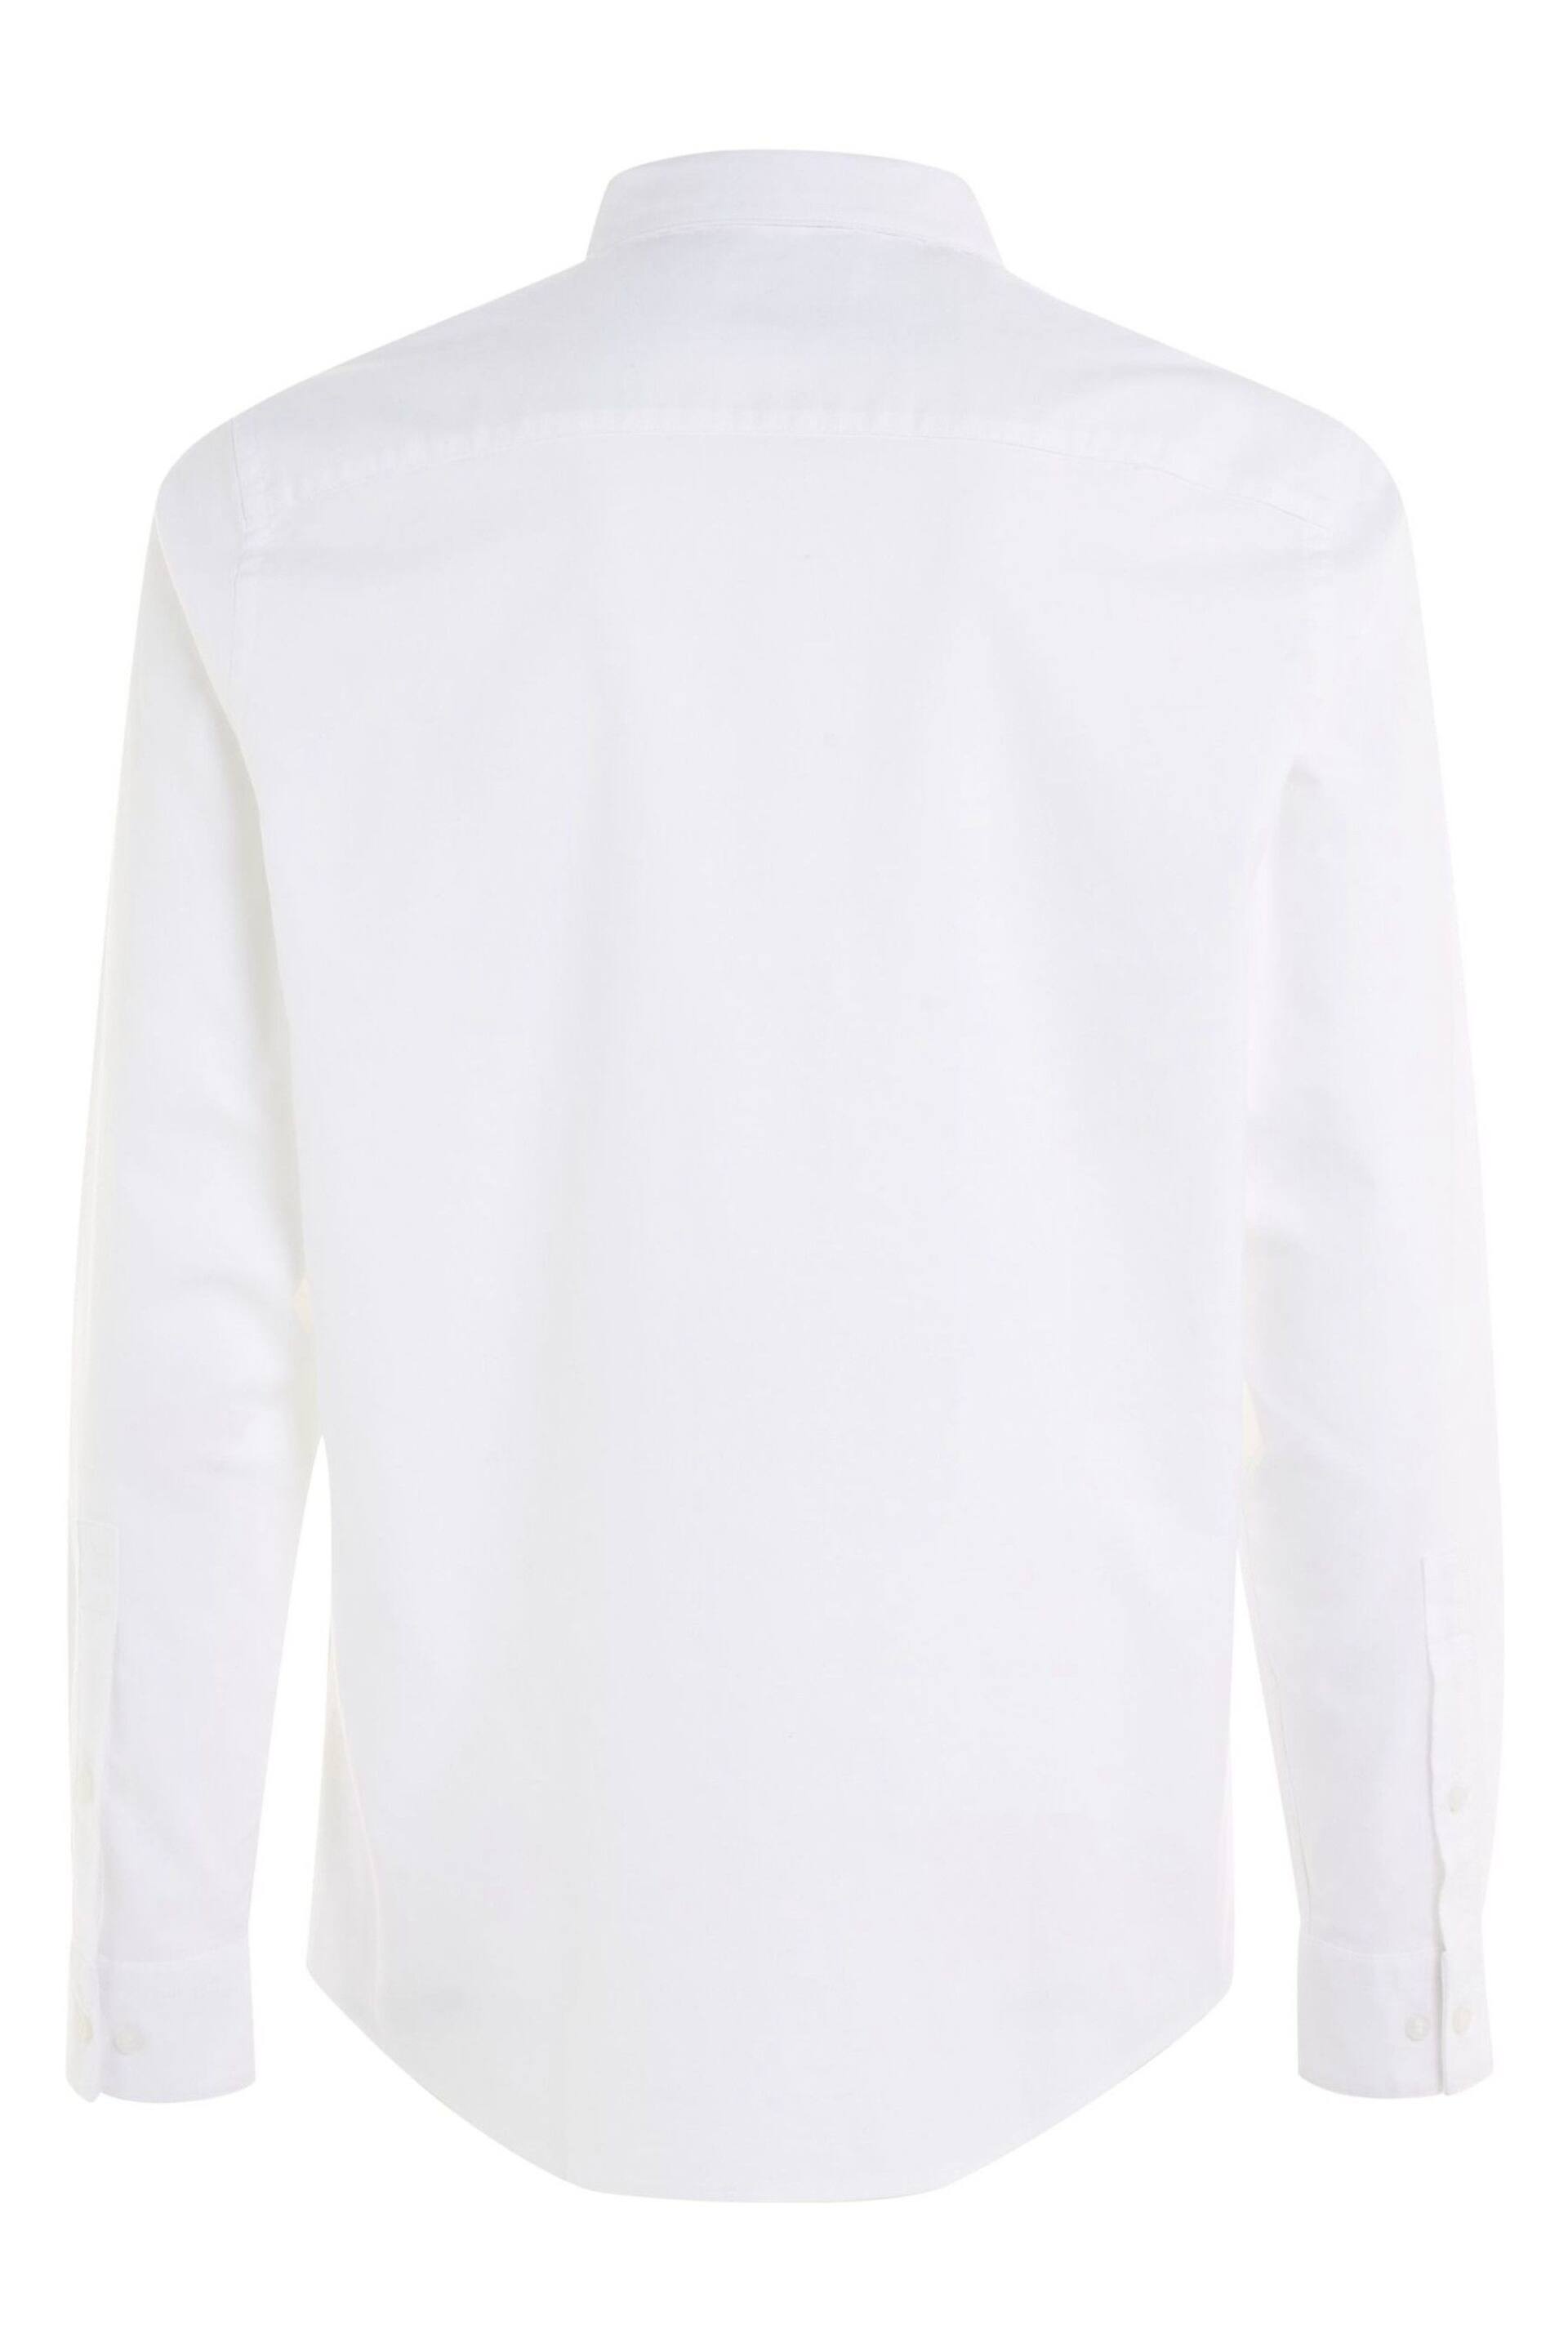 Calvin Klein White Stretch Oxford Shirt - Image 5 of 7